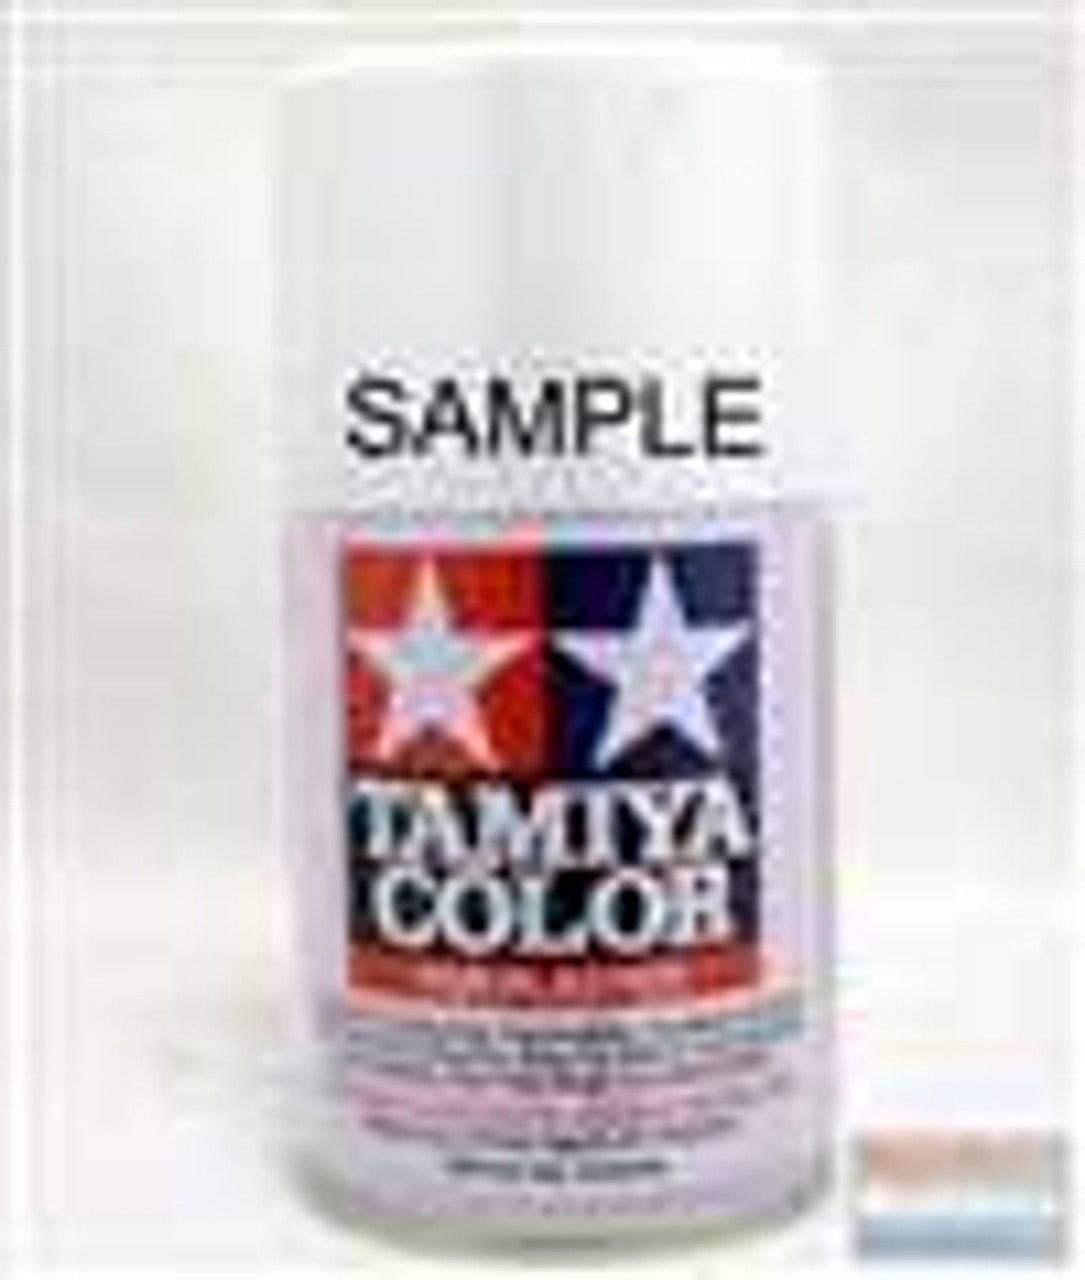 Tamiya 85079 TS-79 Semi Gloss Clear Spray Lacquer Paint Aerosol